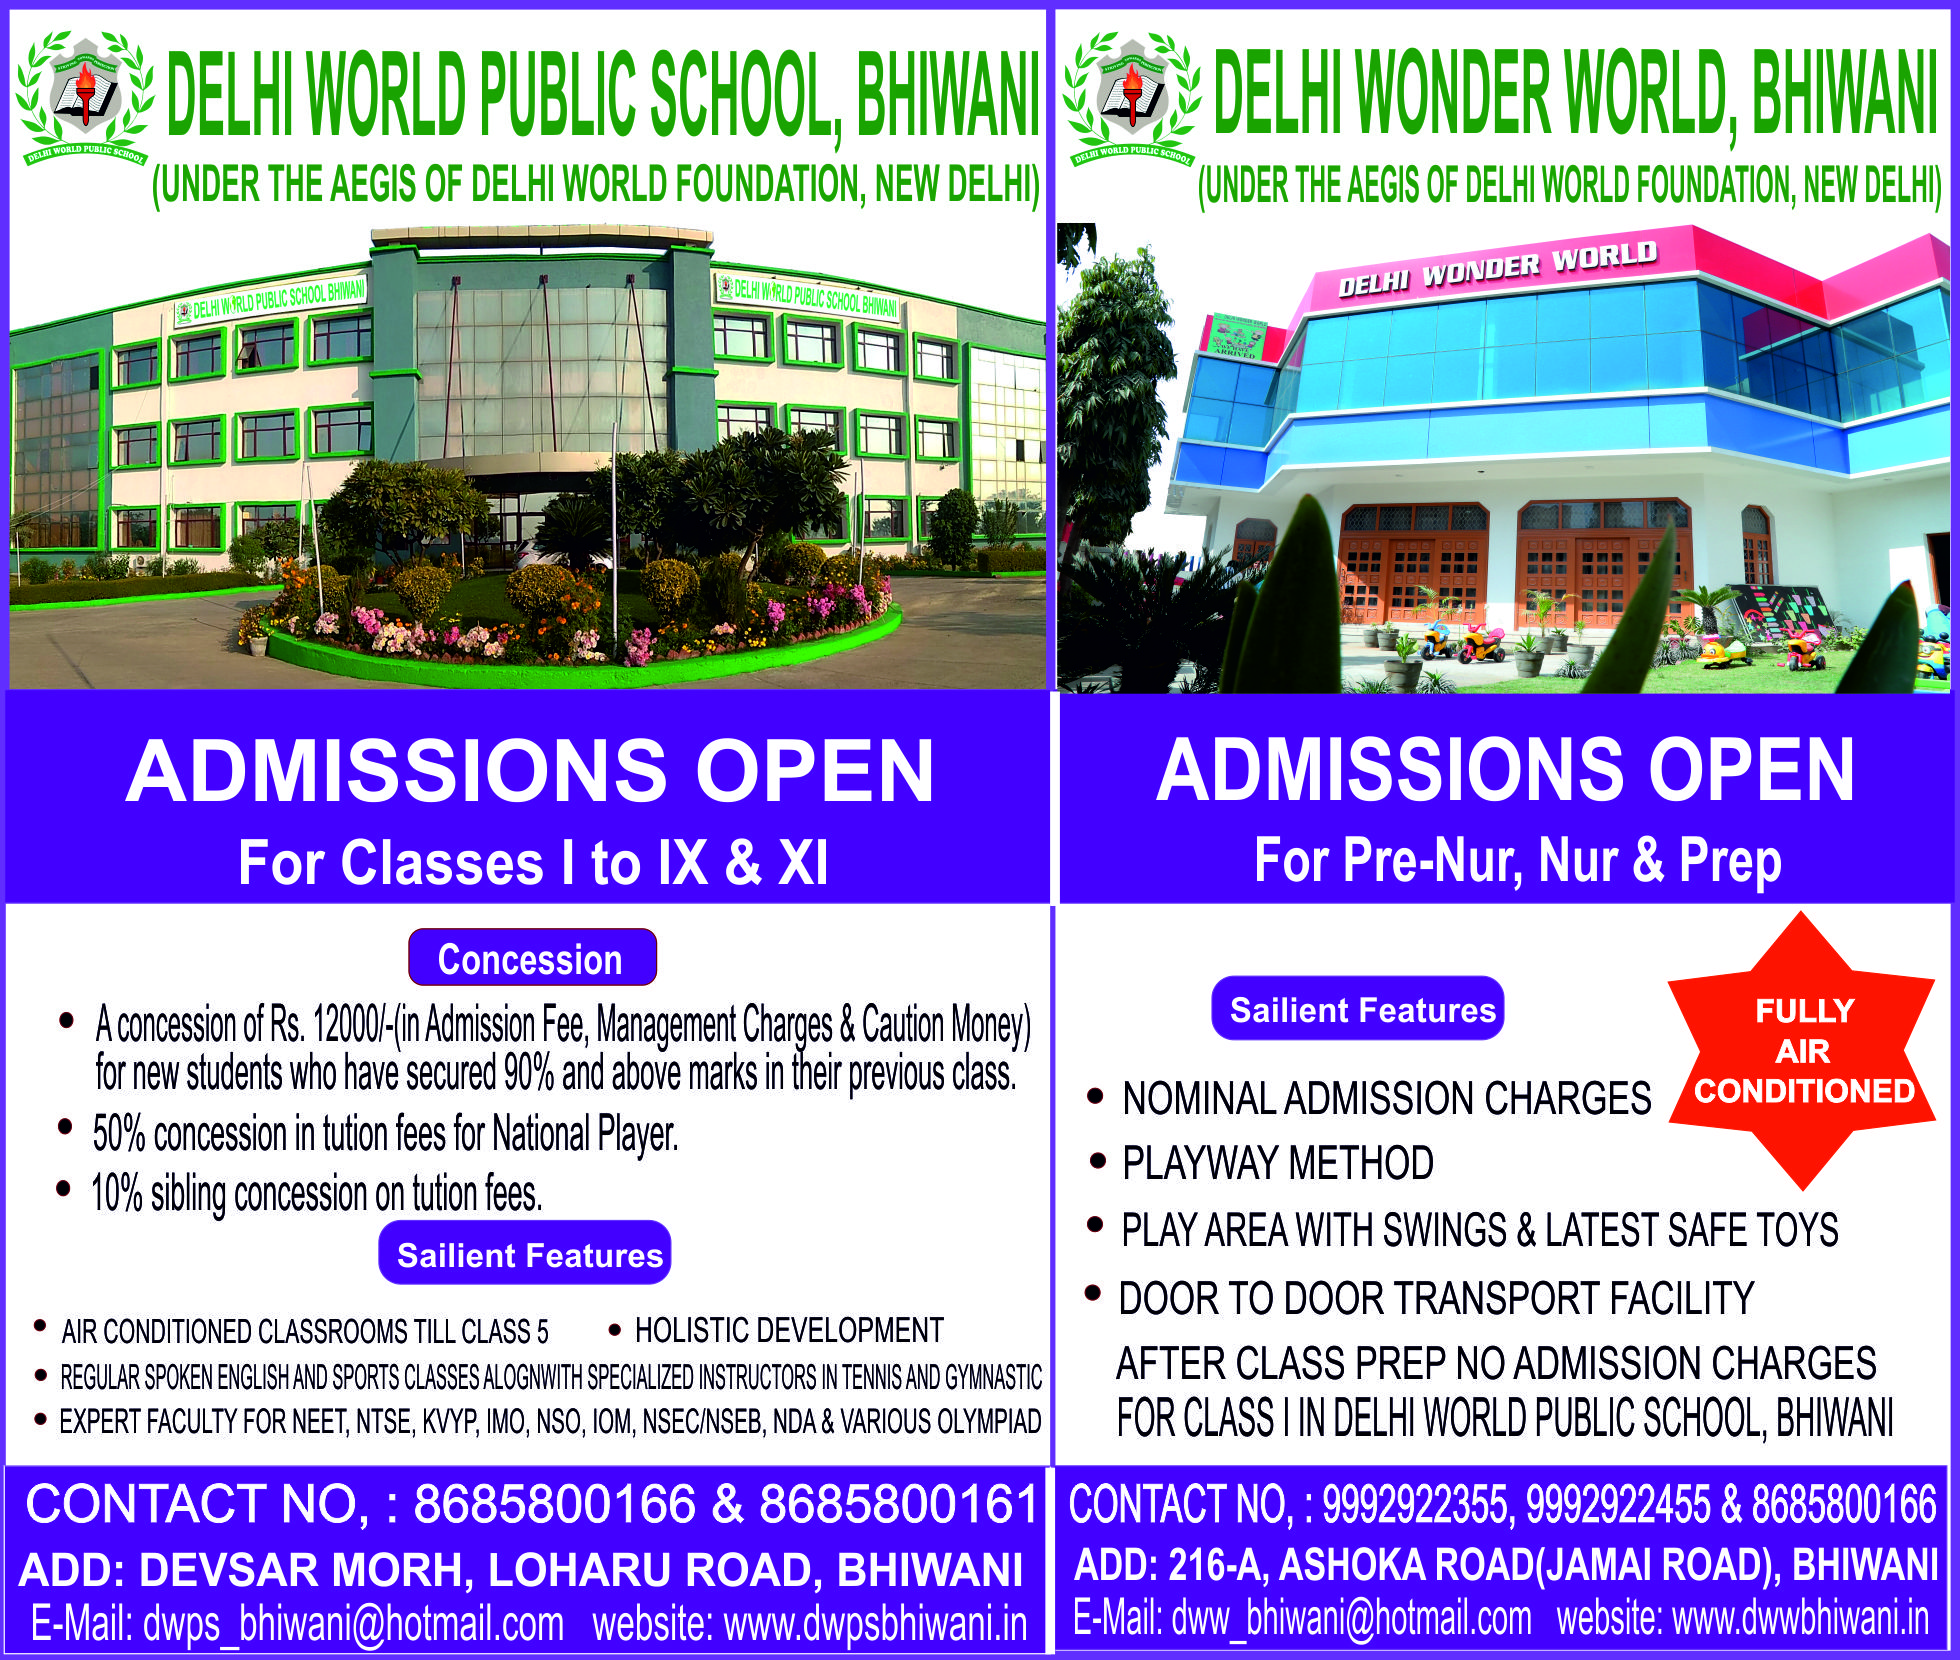 DWPS Bhiwani admission opens